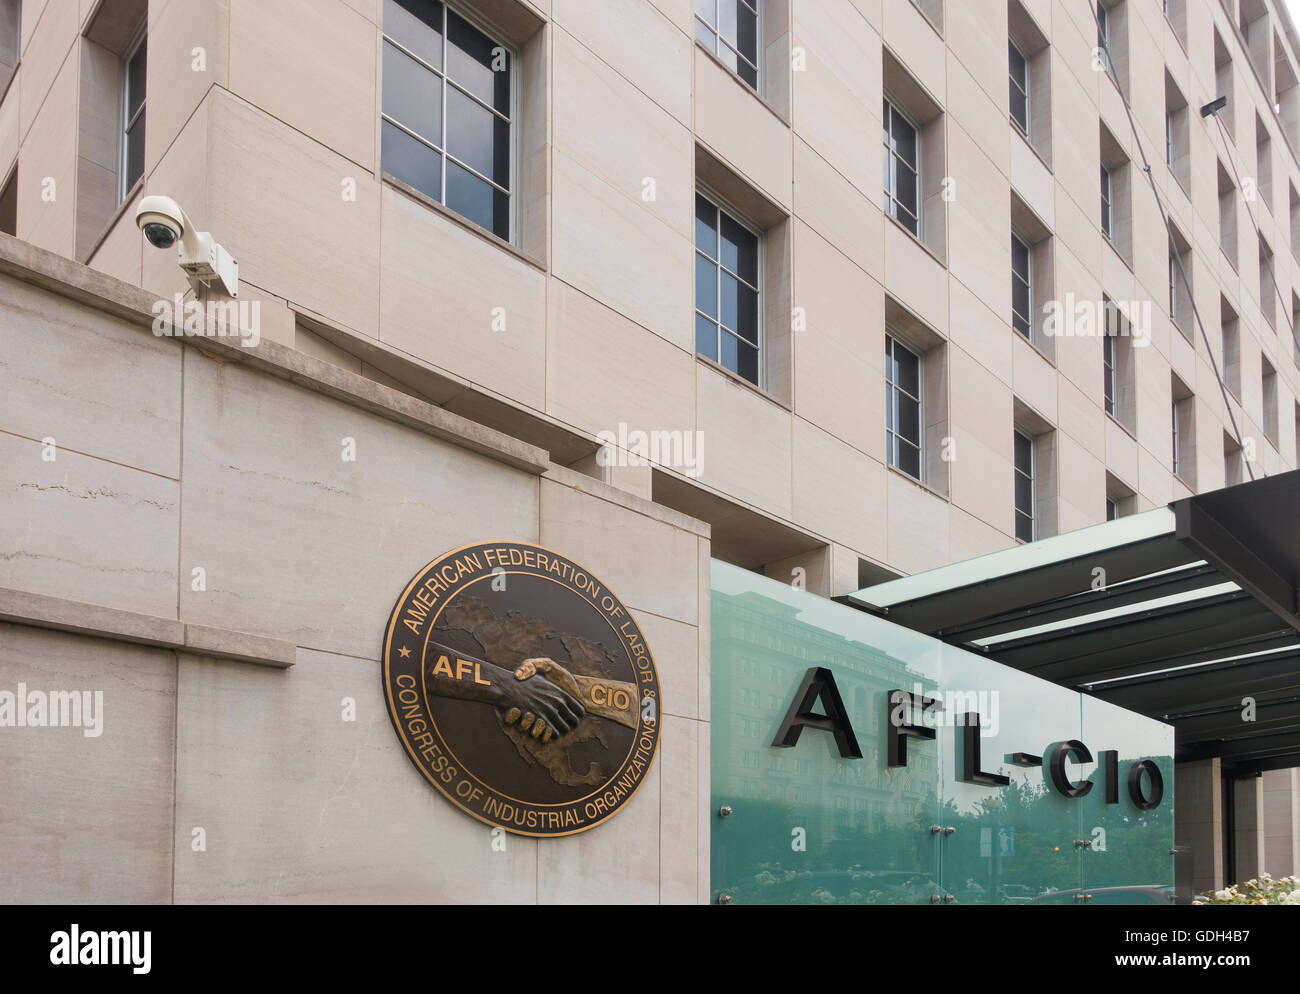 AFL-CIO edificio in Washington DC Foto Stock